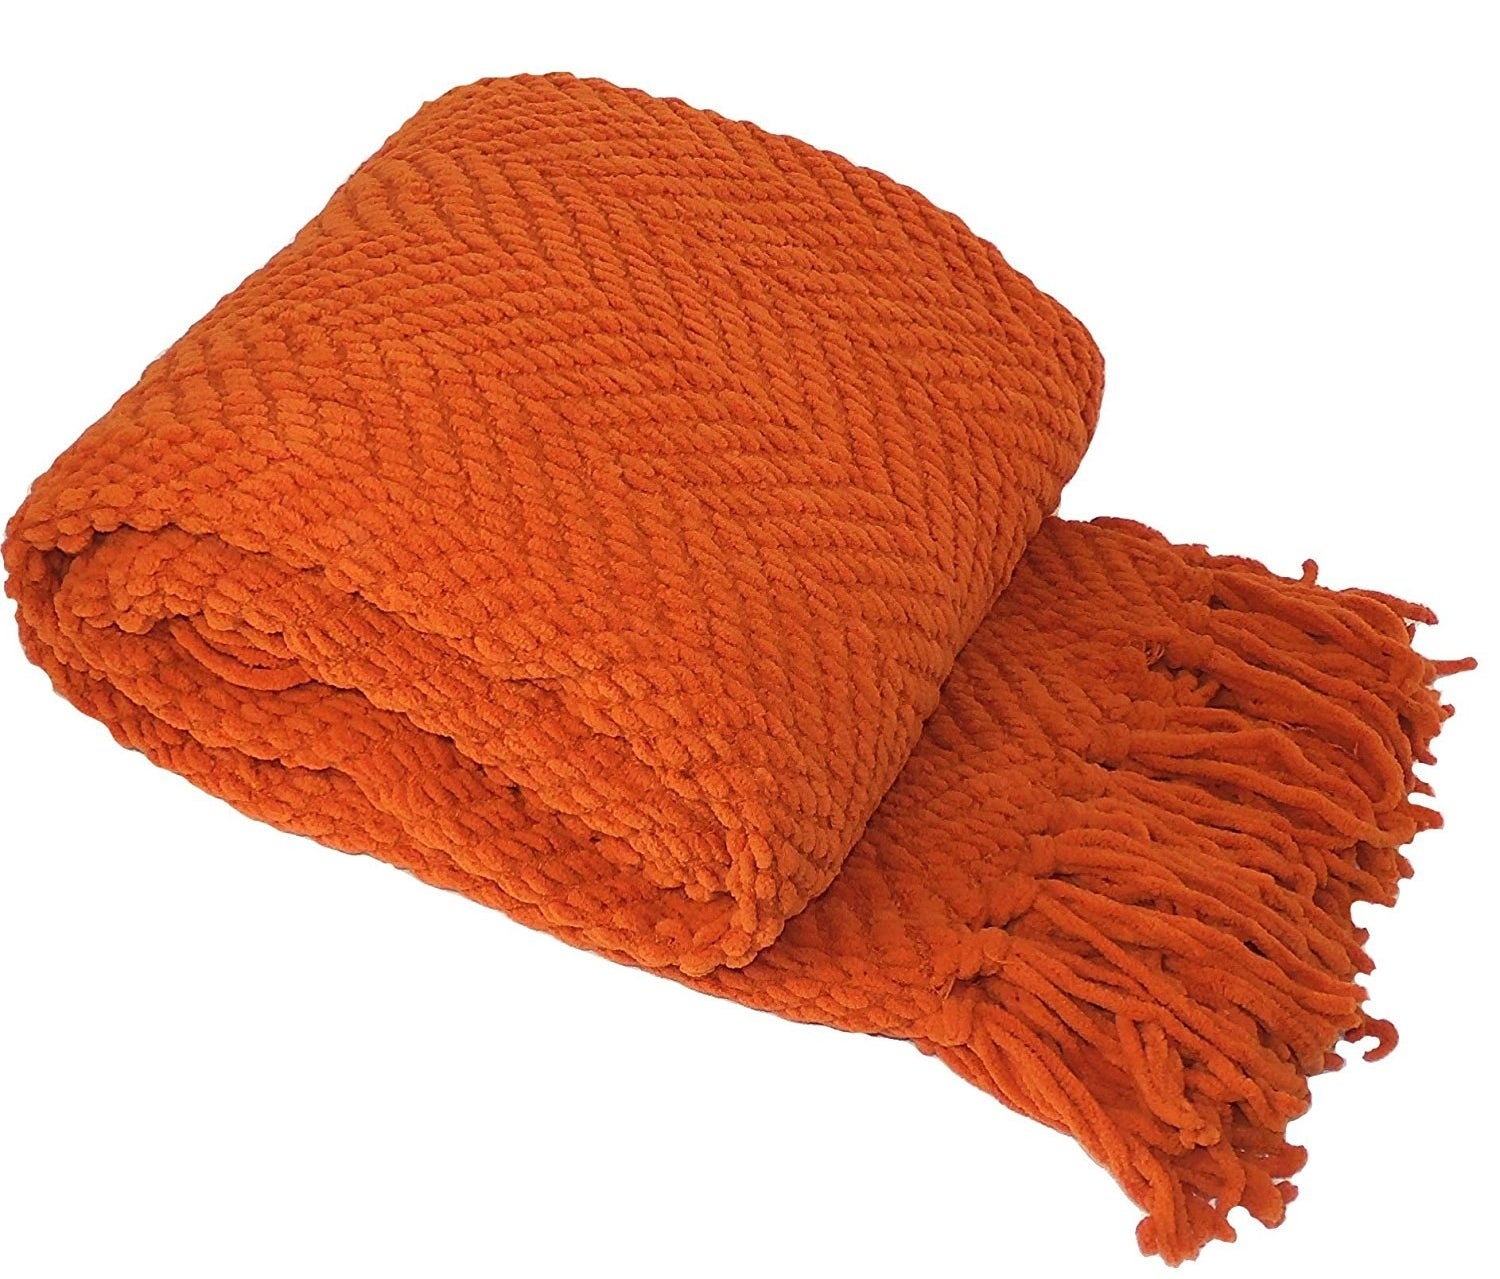 orange blanket with nubby pattern on it